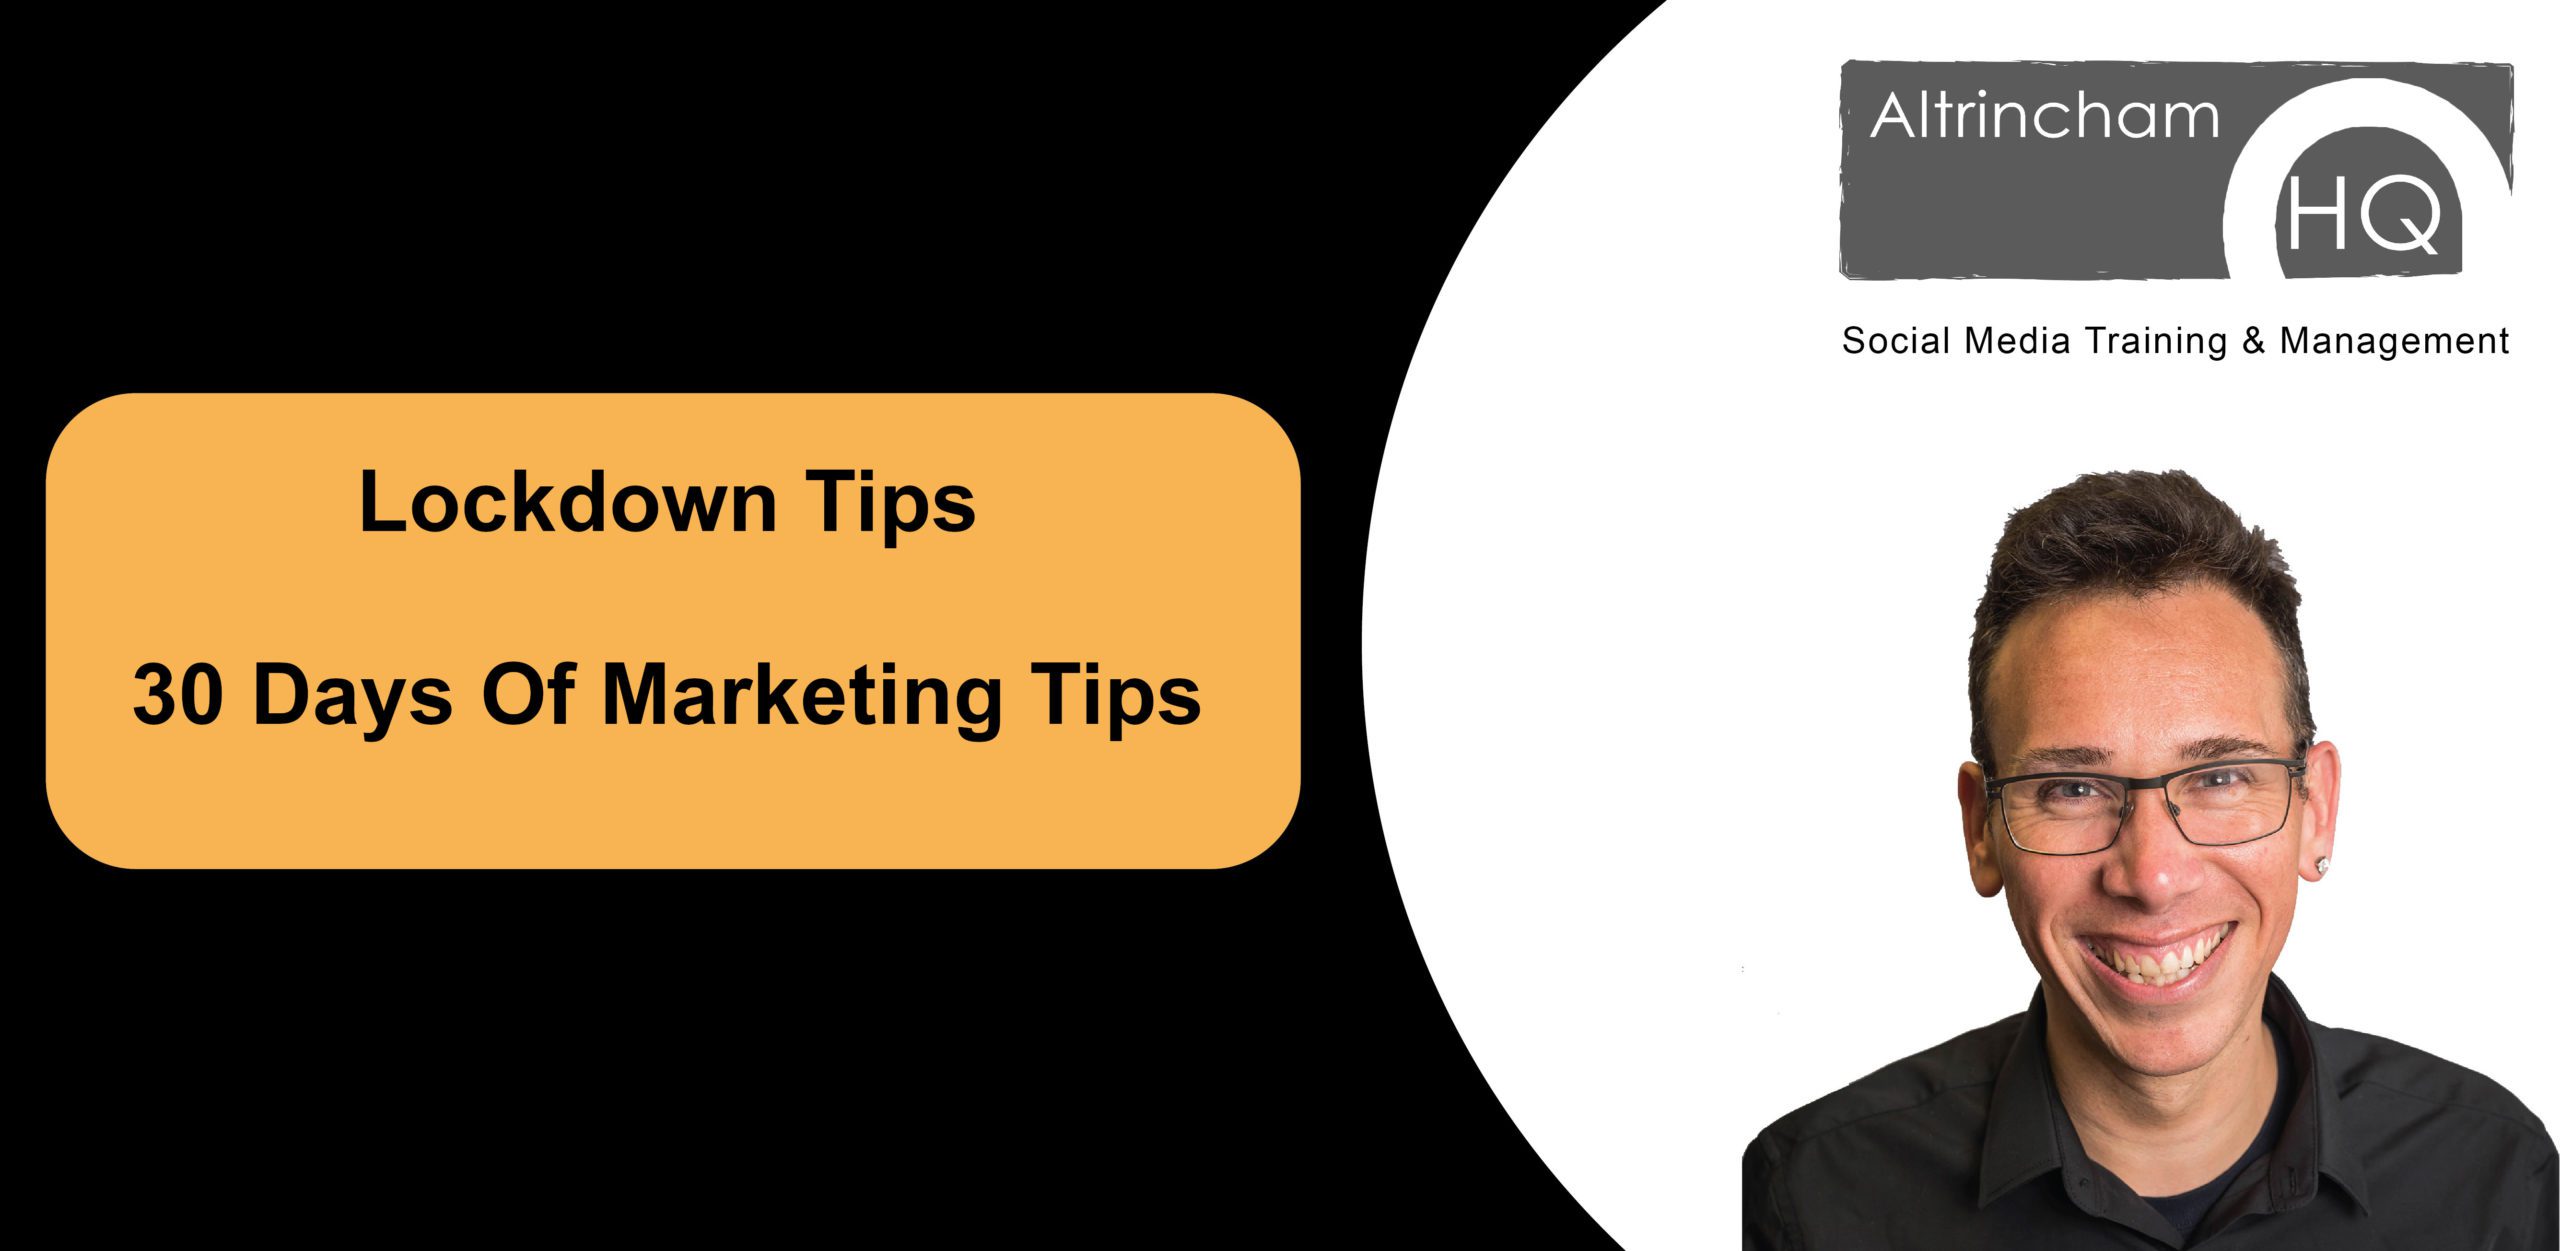 Lockdown Tips: 30 Days Of Marketing Tips